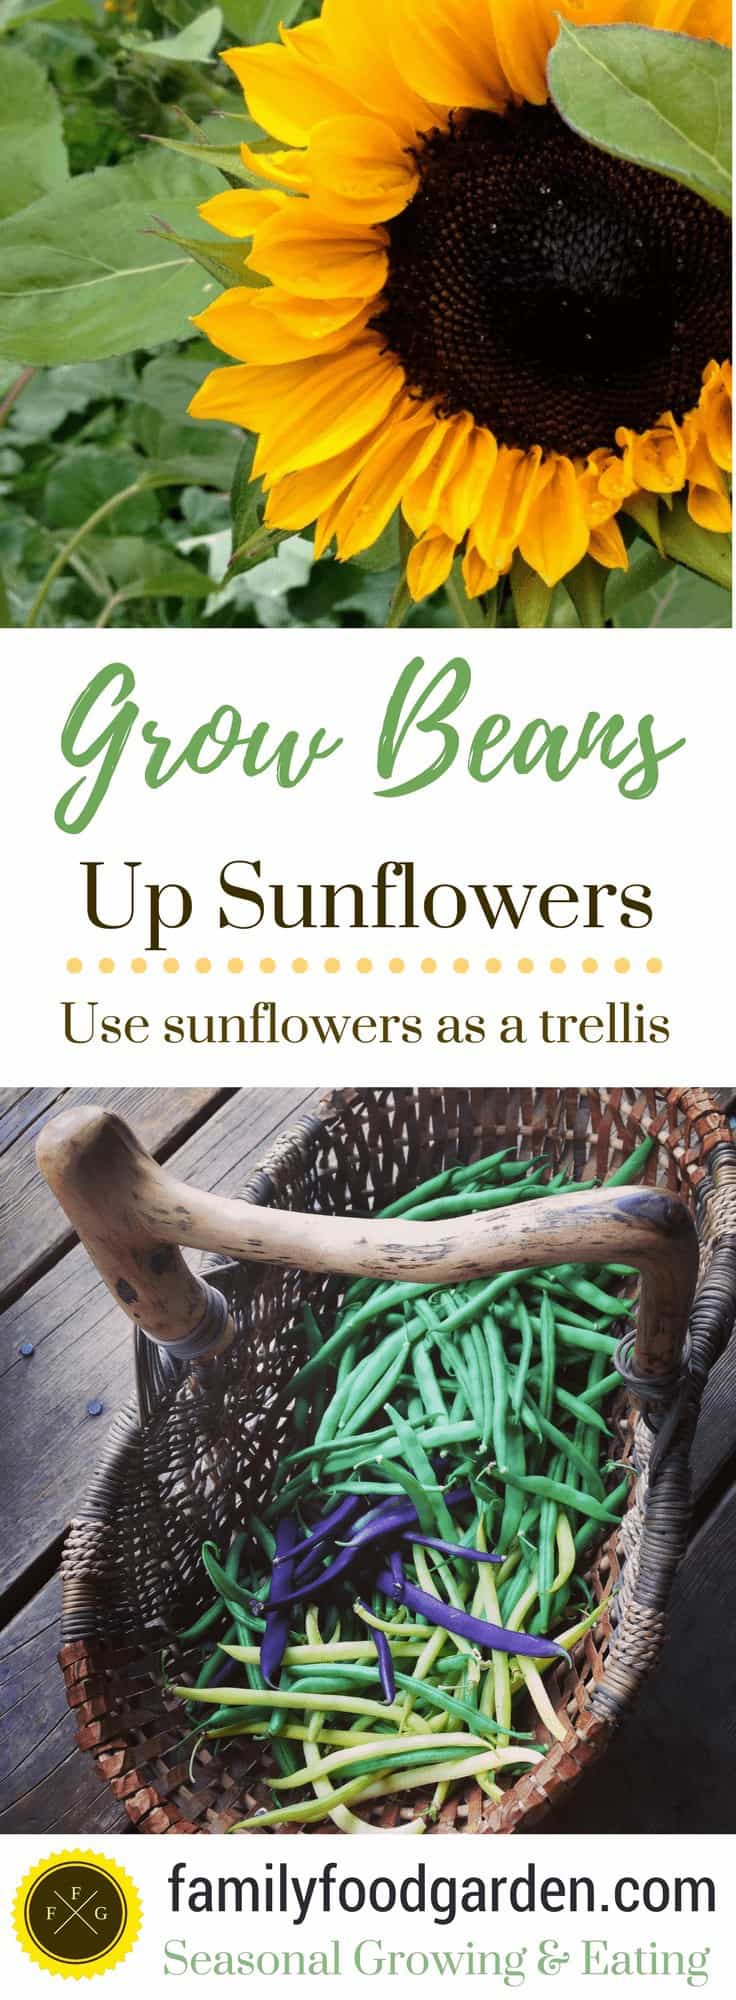 Grow Beans Up Sunflowers: Use sunflowers as a trellis